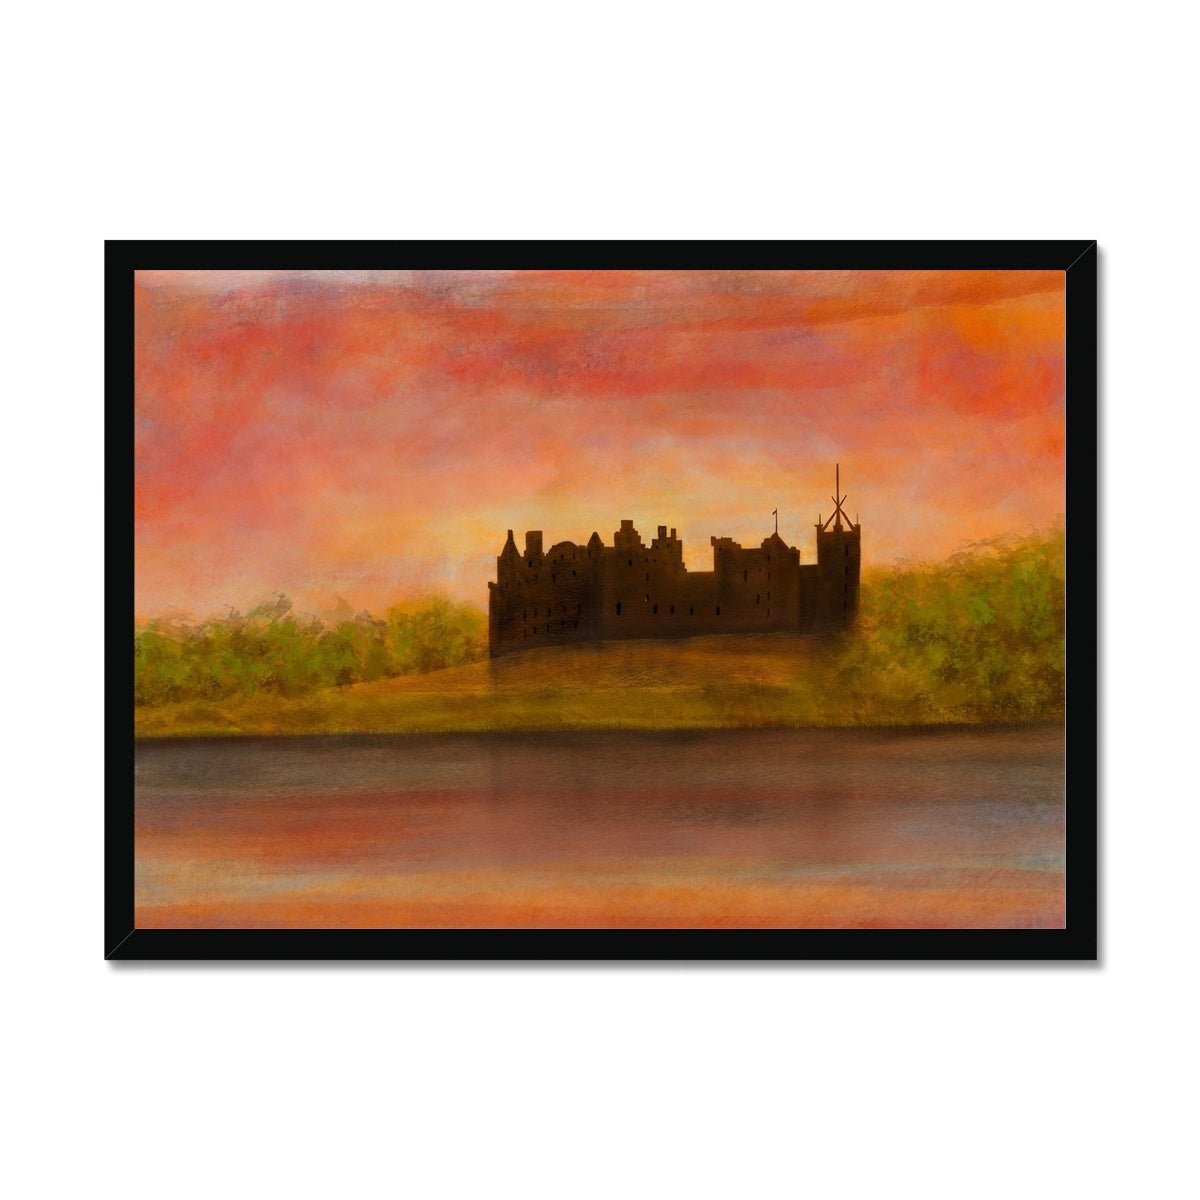 Linlithgow Palace Dusk Painting | Framed Prints From Scotland-Framed Prints-Historic & Iconic Scotland Art Gallery-A2 Landscape-Black Frame-Paintings, Prints, Homeware, Art Gifts From Scotland By Scottish Artist Kevin Hunter